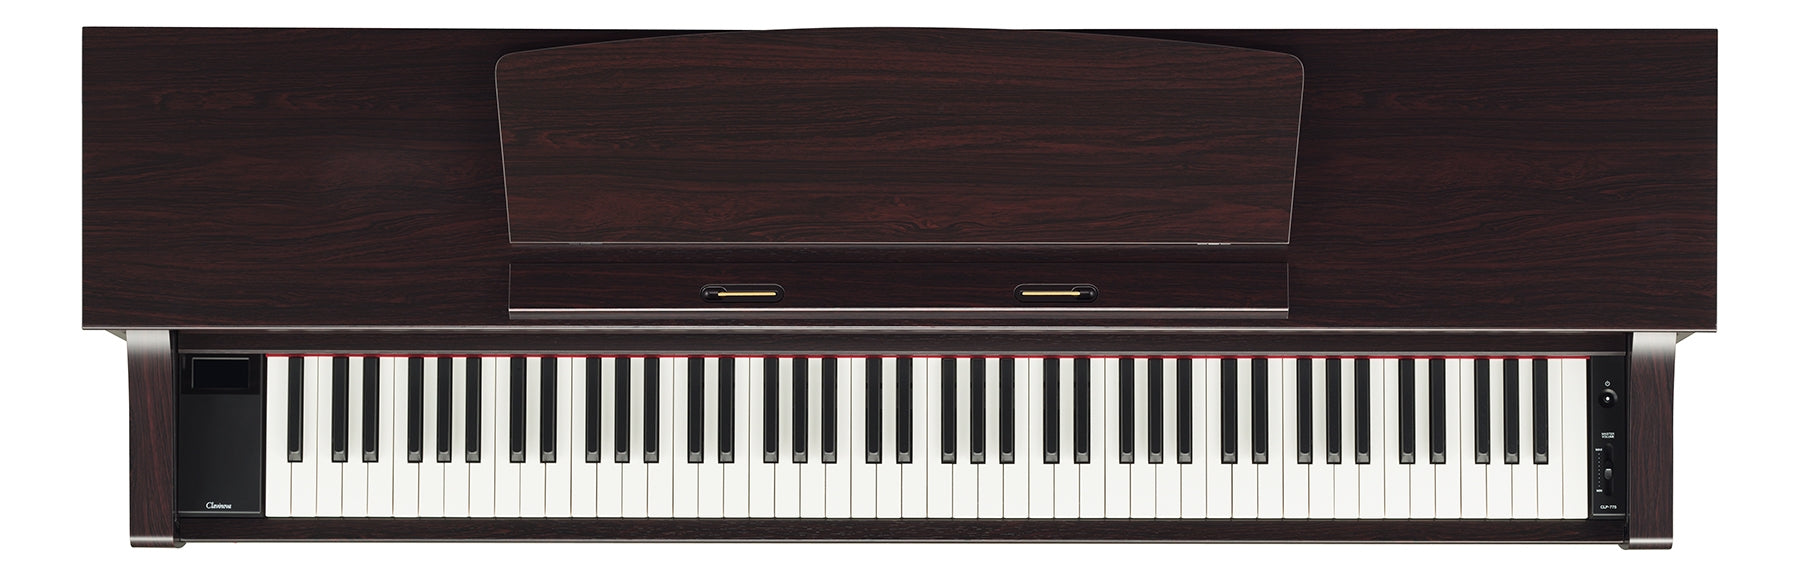 Yamaha Clavinova CLP775R Digital Piano - Dark Rosewood